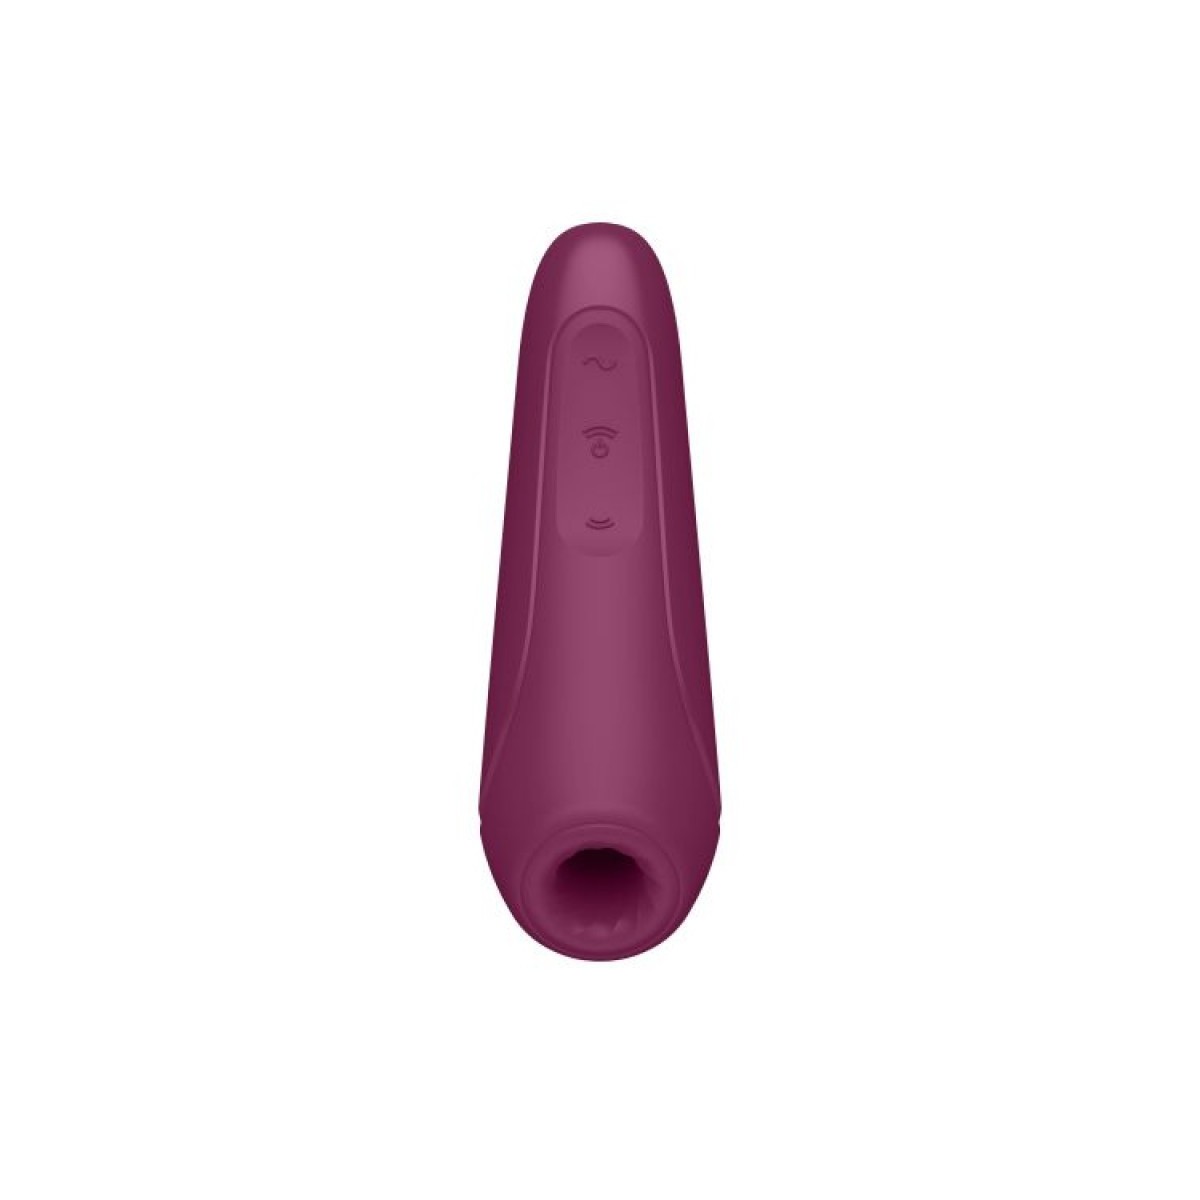 Vibratore vaginale succhia clitoride Satisfyer Curvy 1+